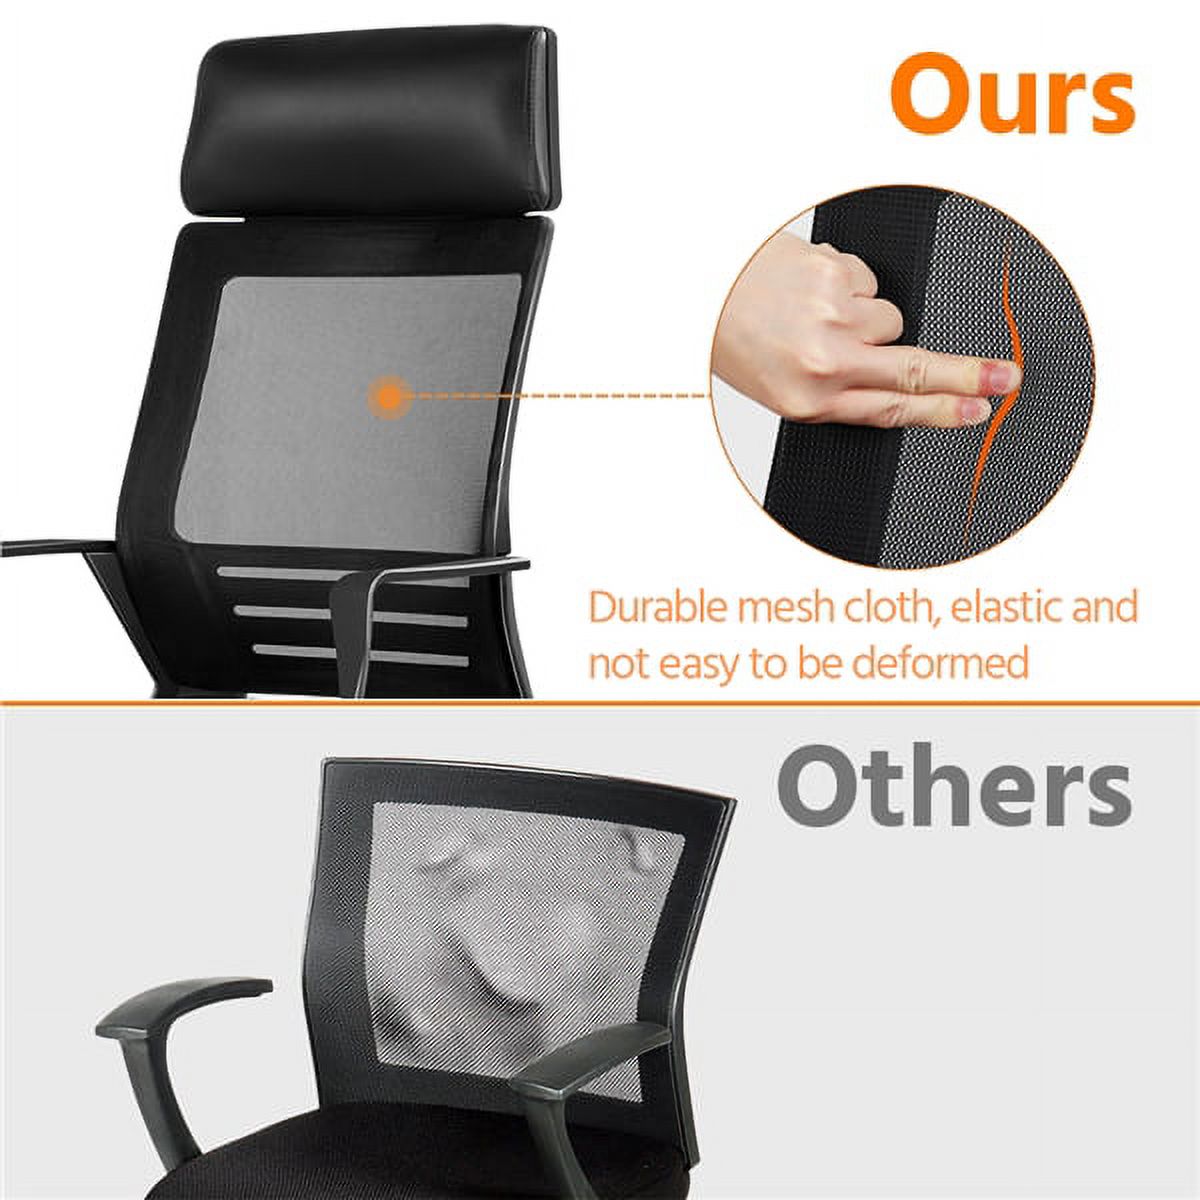 SMILE MART Adjustable Ergonomic Mesh Office Chair Swivel Computer Chair, Black - image 3 of 15